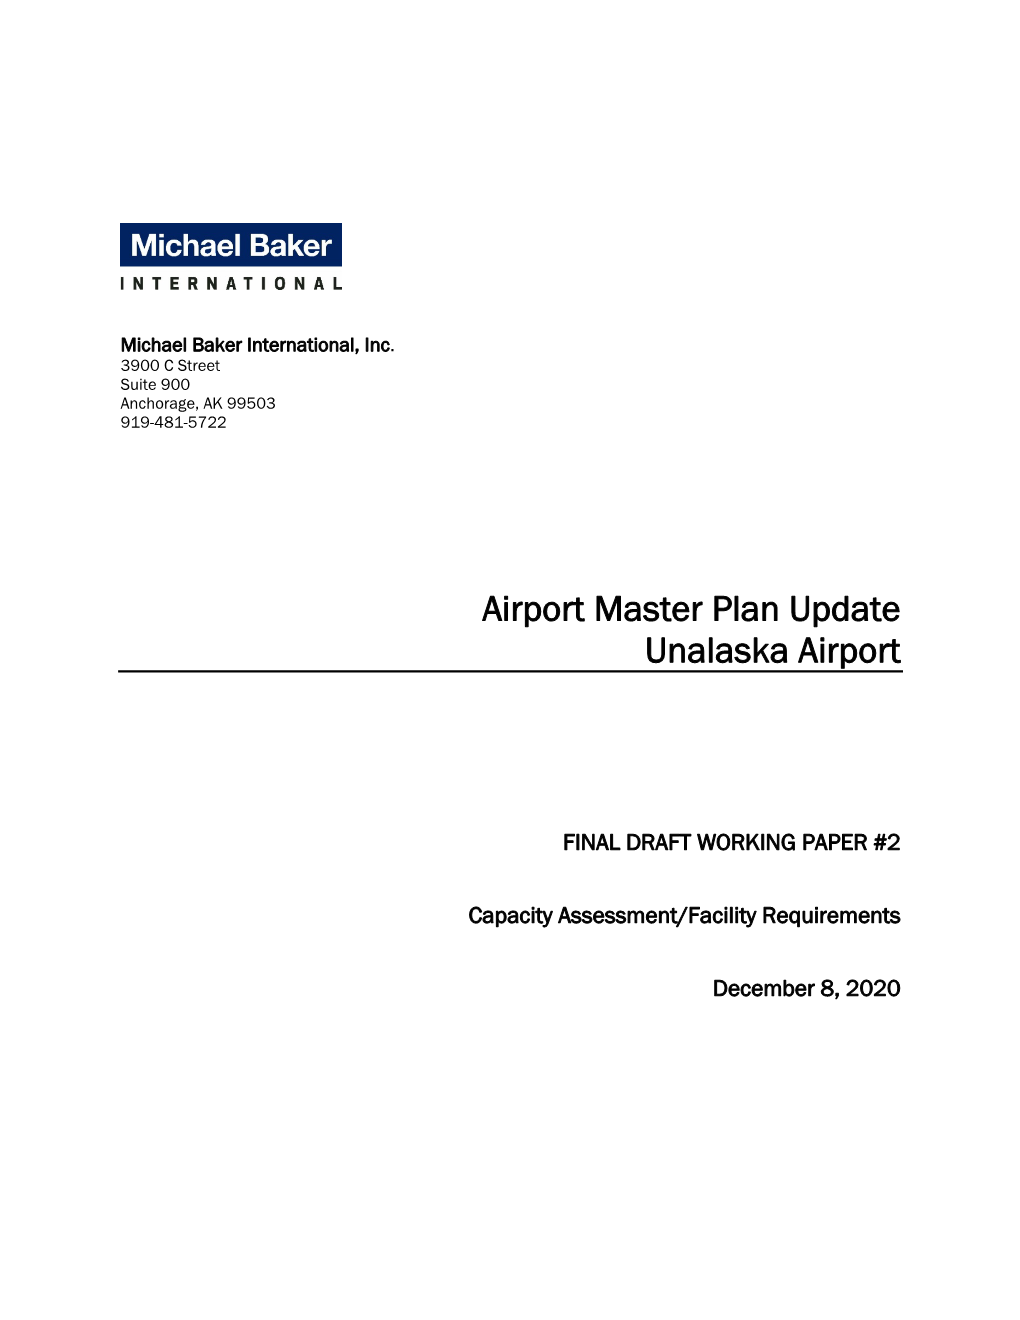 Airport Master Plan Update Unalaska Airport